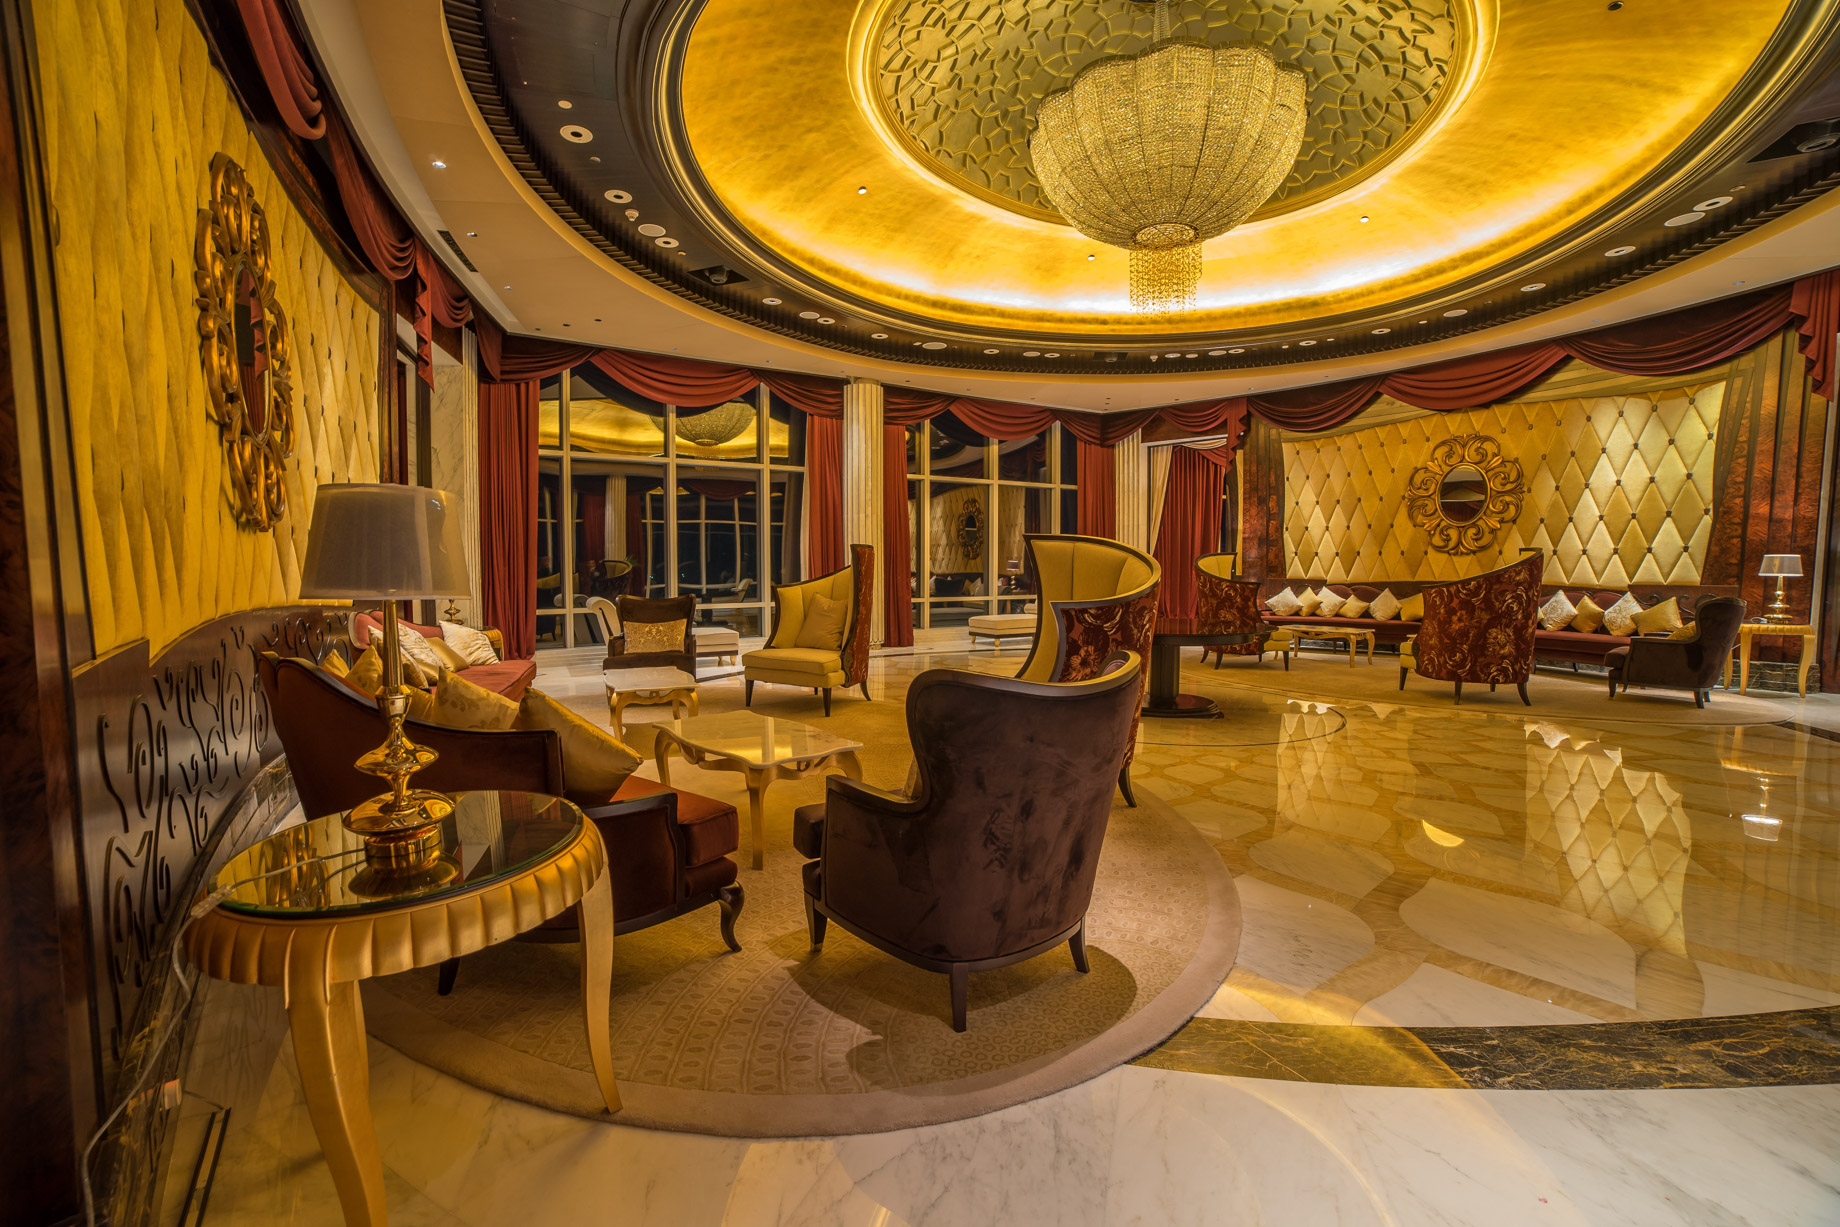 The St. Regis Abu Dhabi Hotel - Abu Dhabi, United Arab Emirates - Exceptionally Luxurious Decor